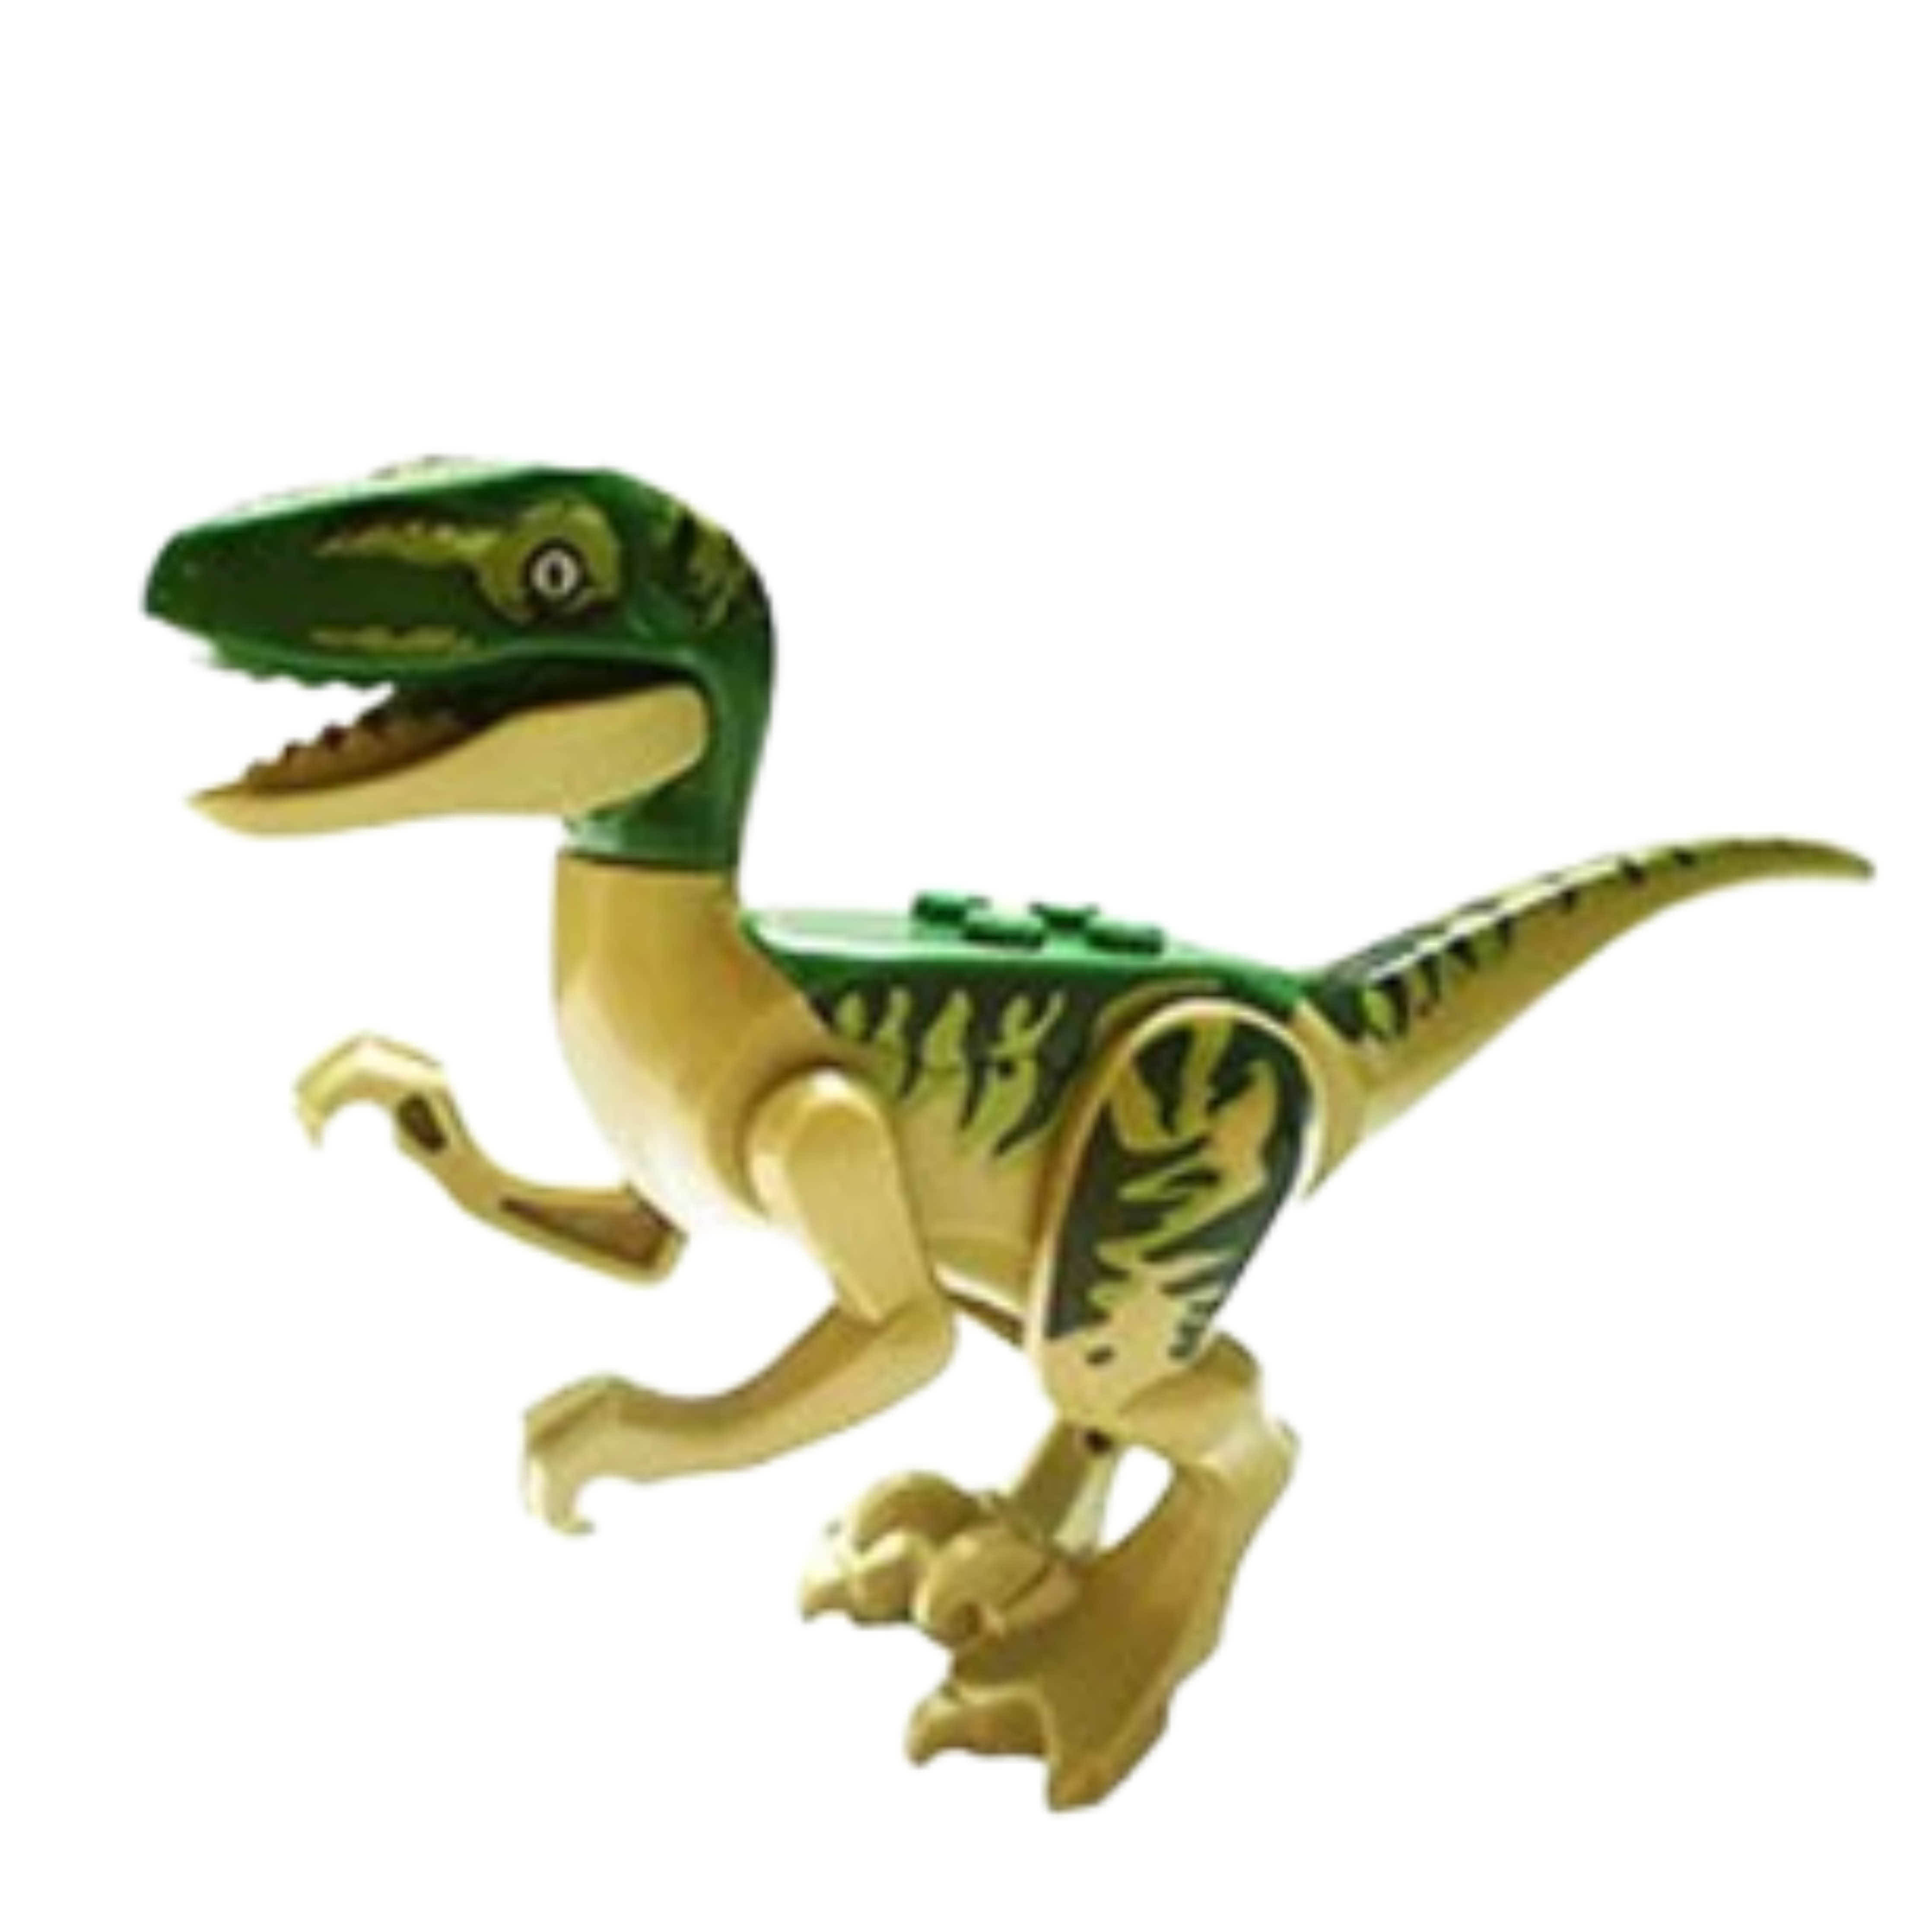 LEGO Jurassic World - Customize, Create Dinosaur Dilophosaurus